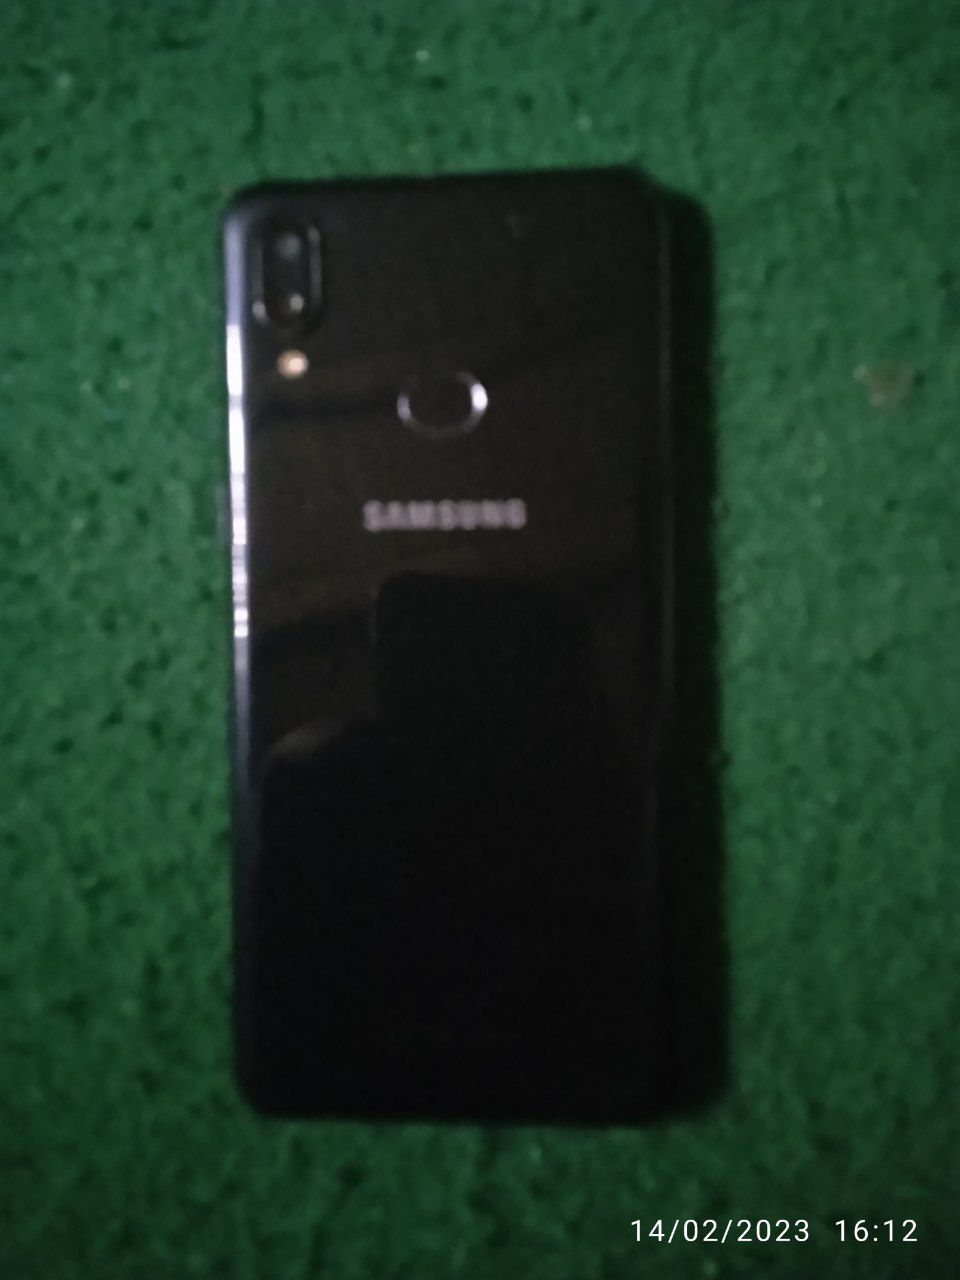 Samsung A 10 S sotiladi